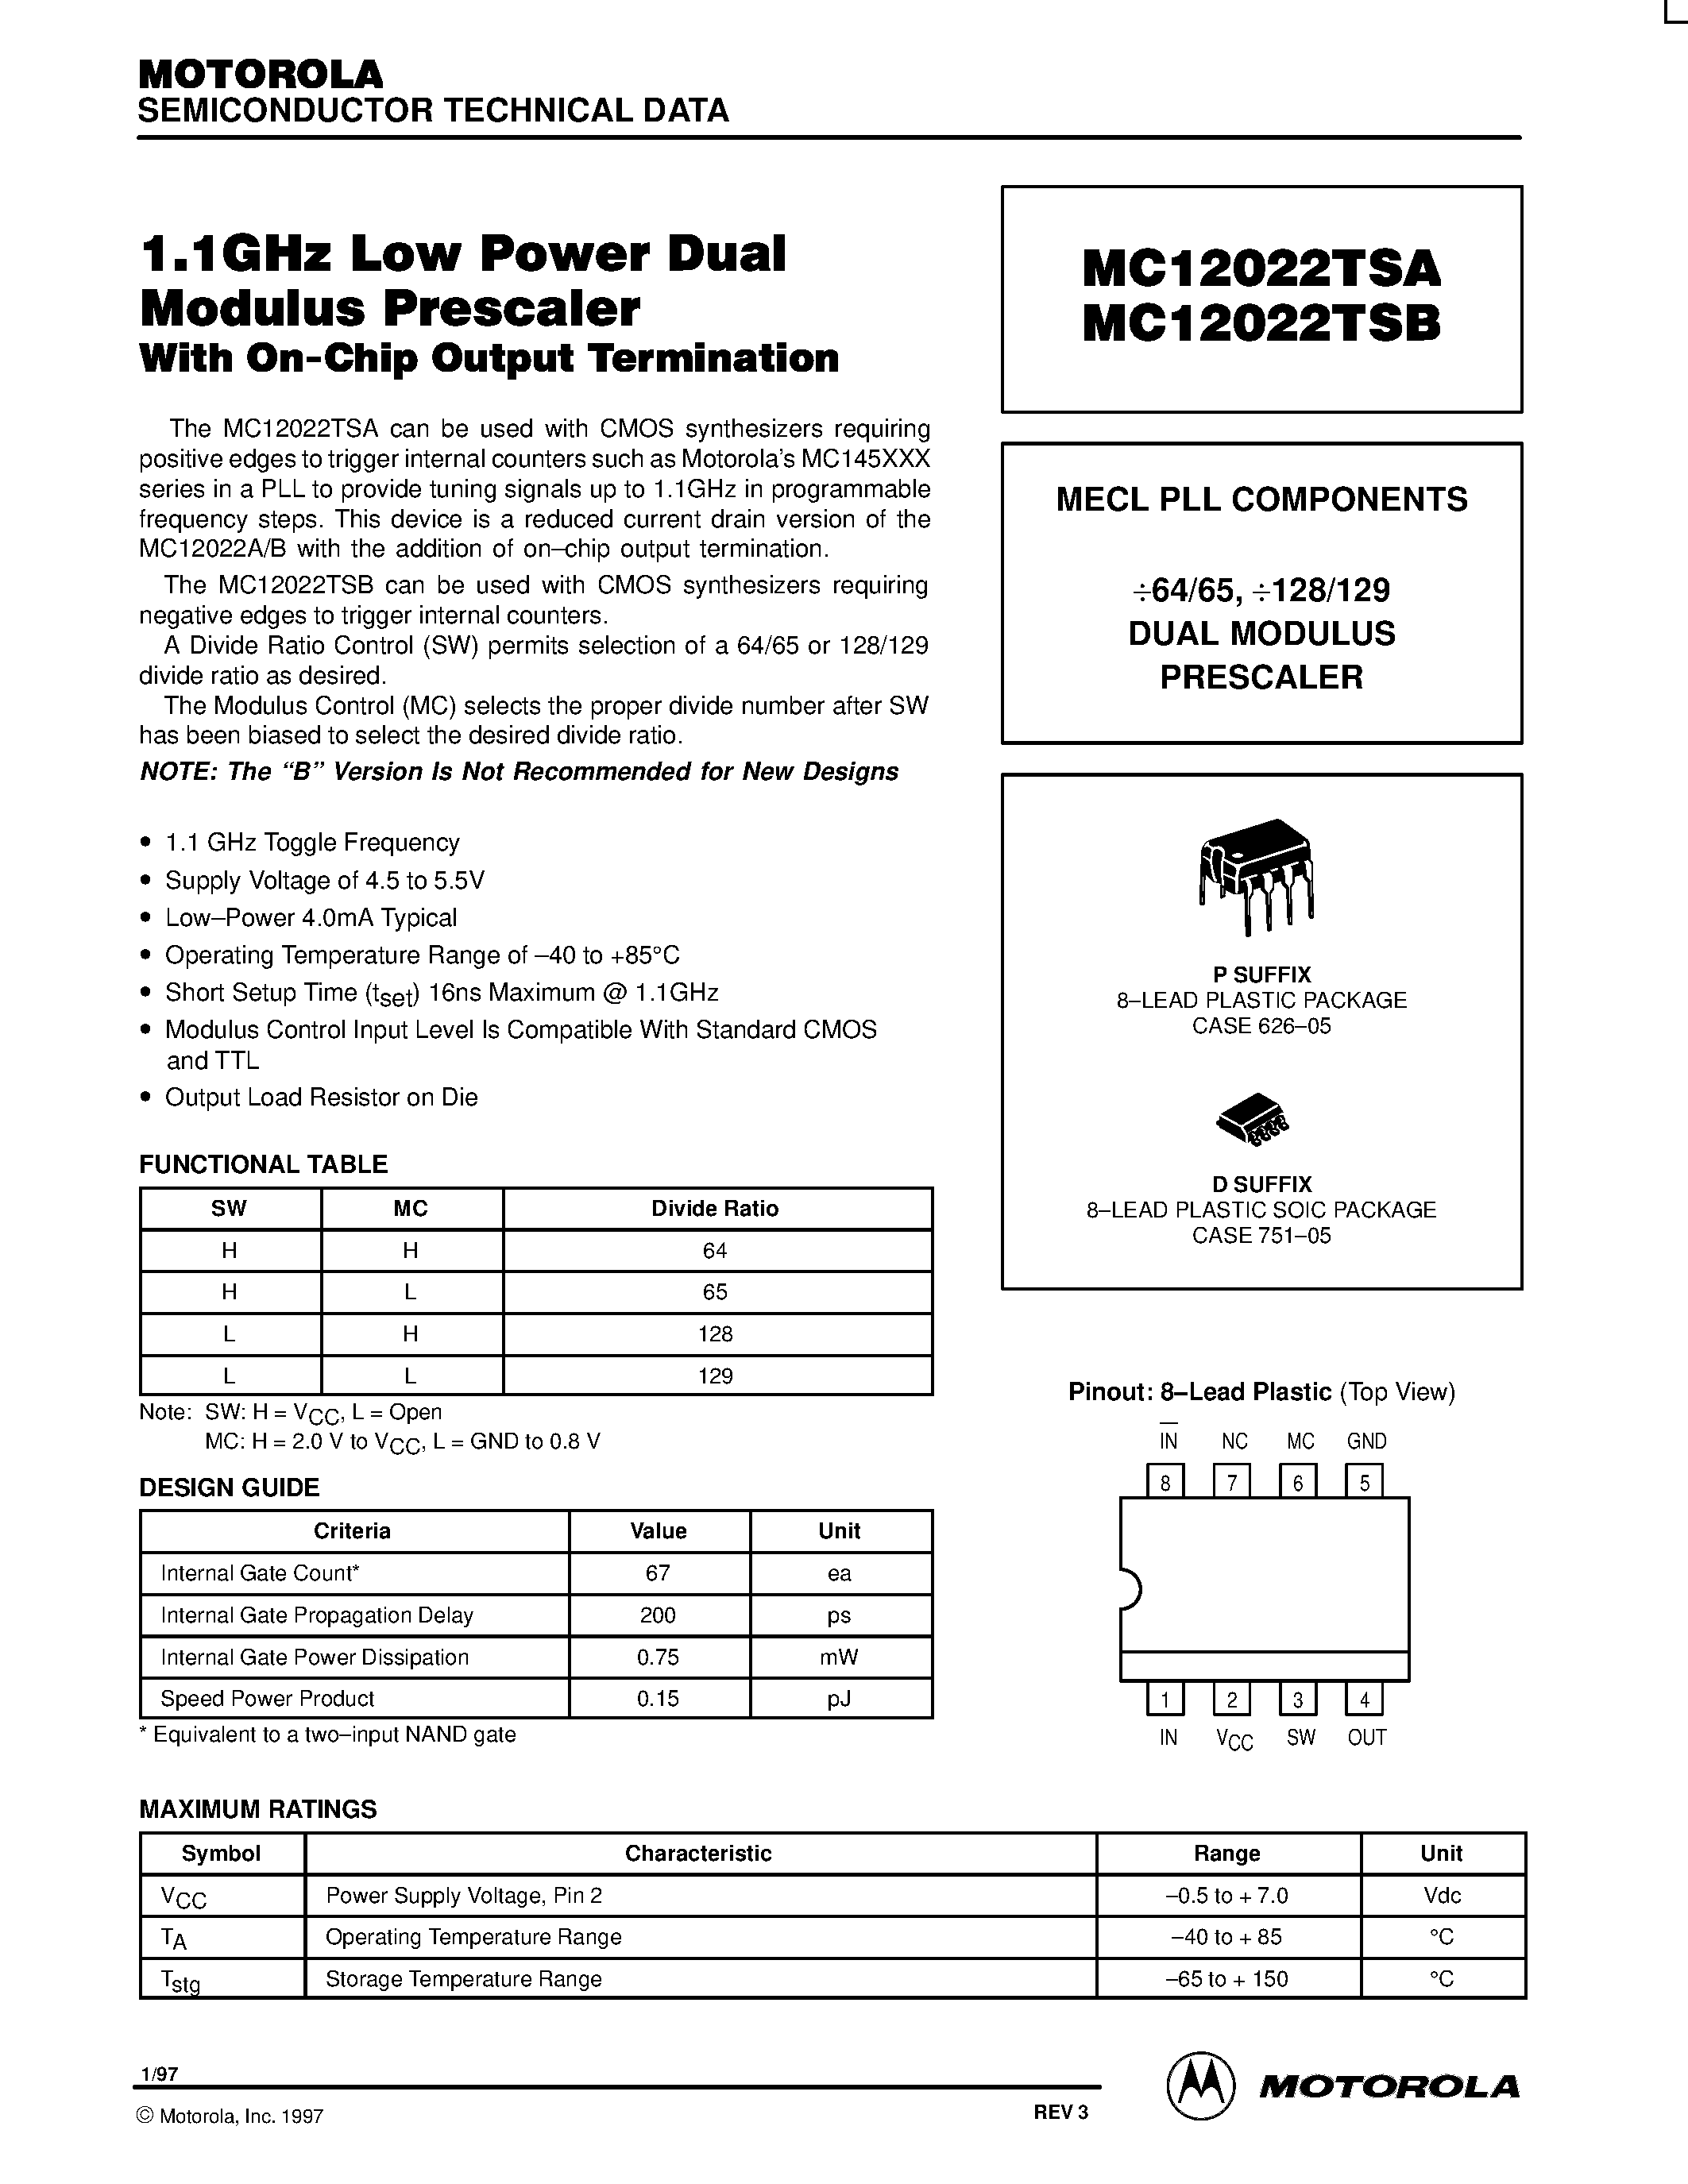 Datasheet MC12022TSBD - MECL PLL COMPONENTS 64/65 / 128/129 DUAL MODULUS PRESCALE page 1